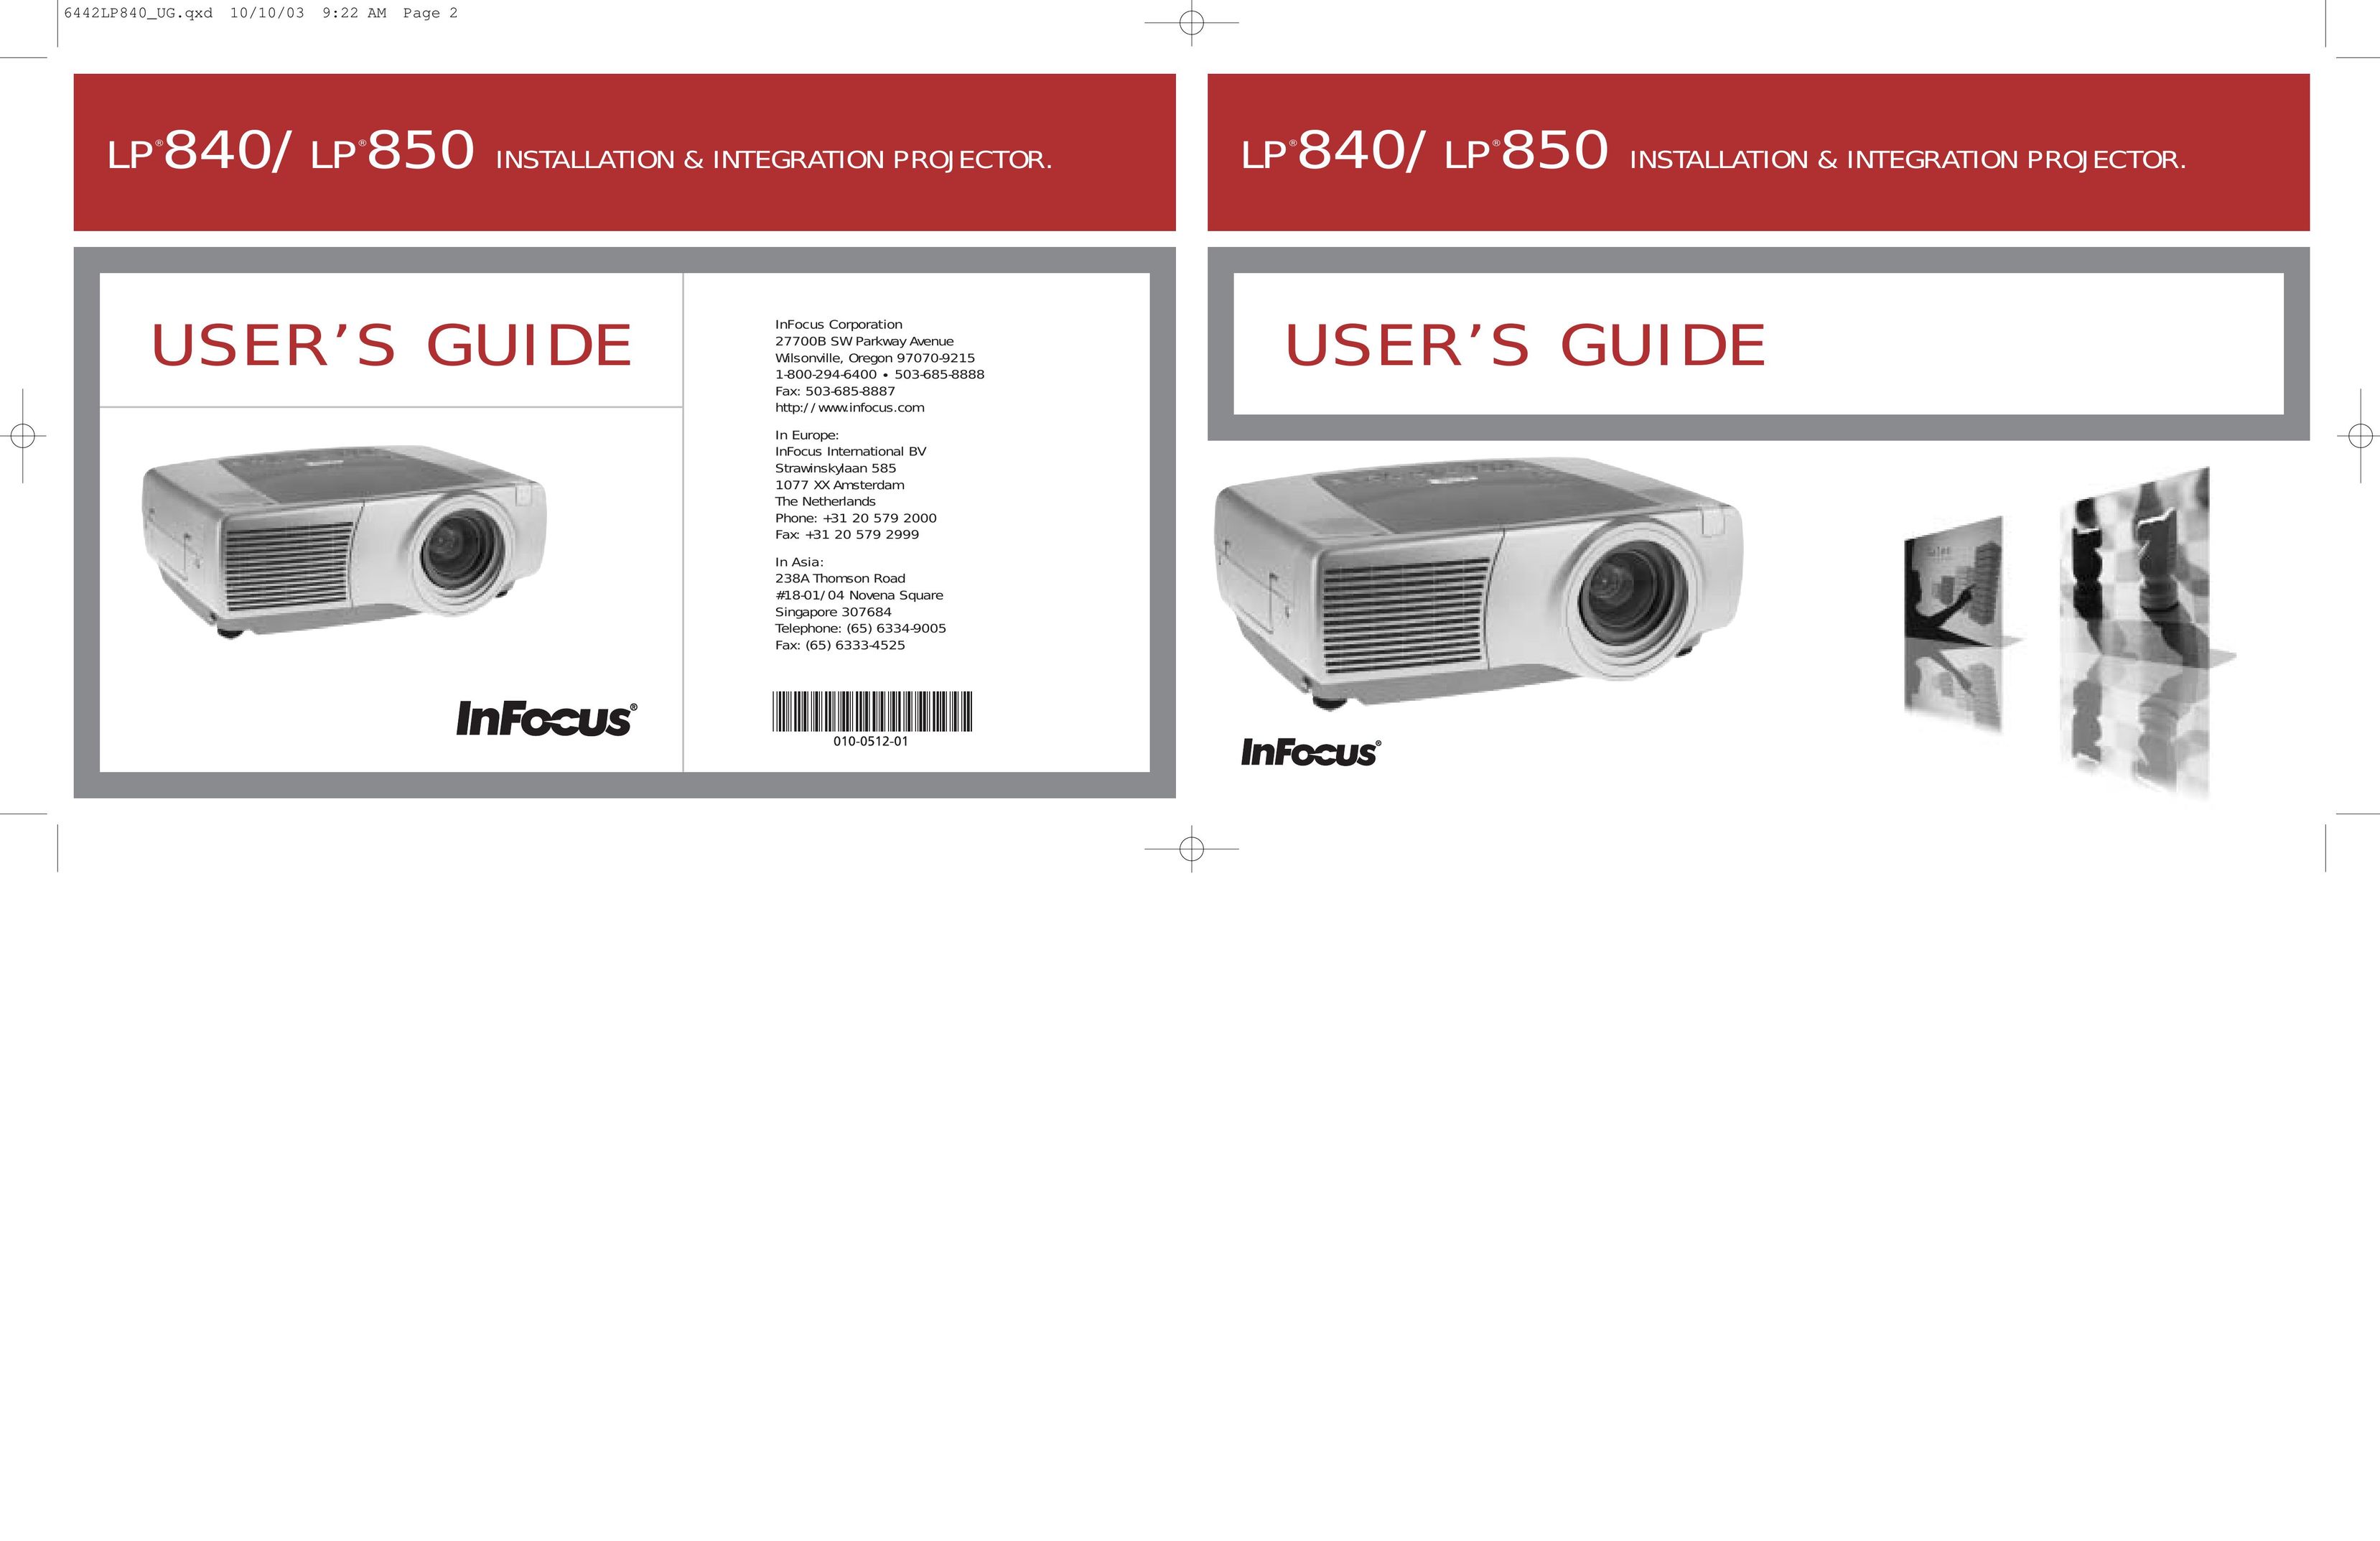 Jabra LP 850 Projector User Manual